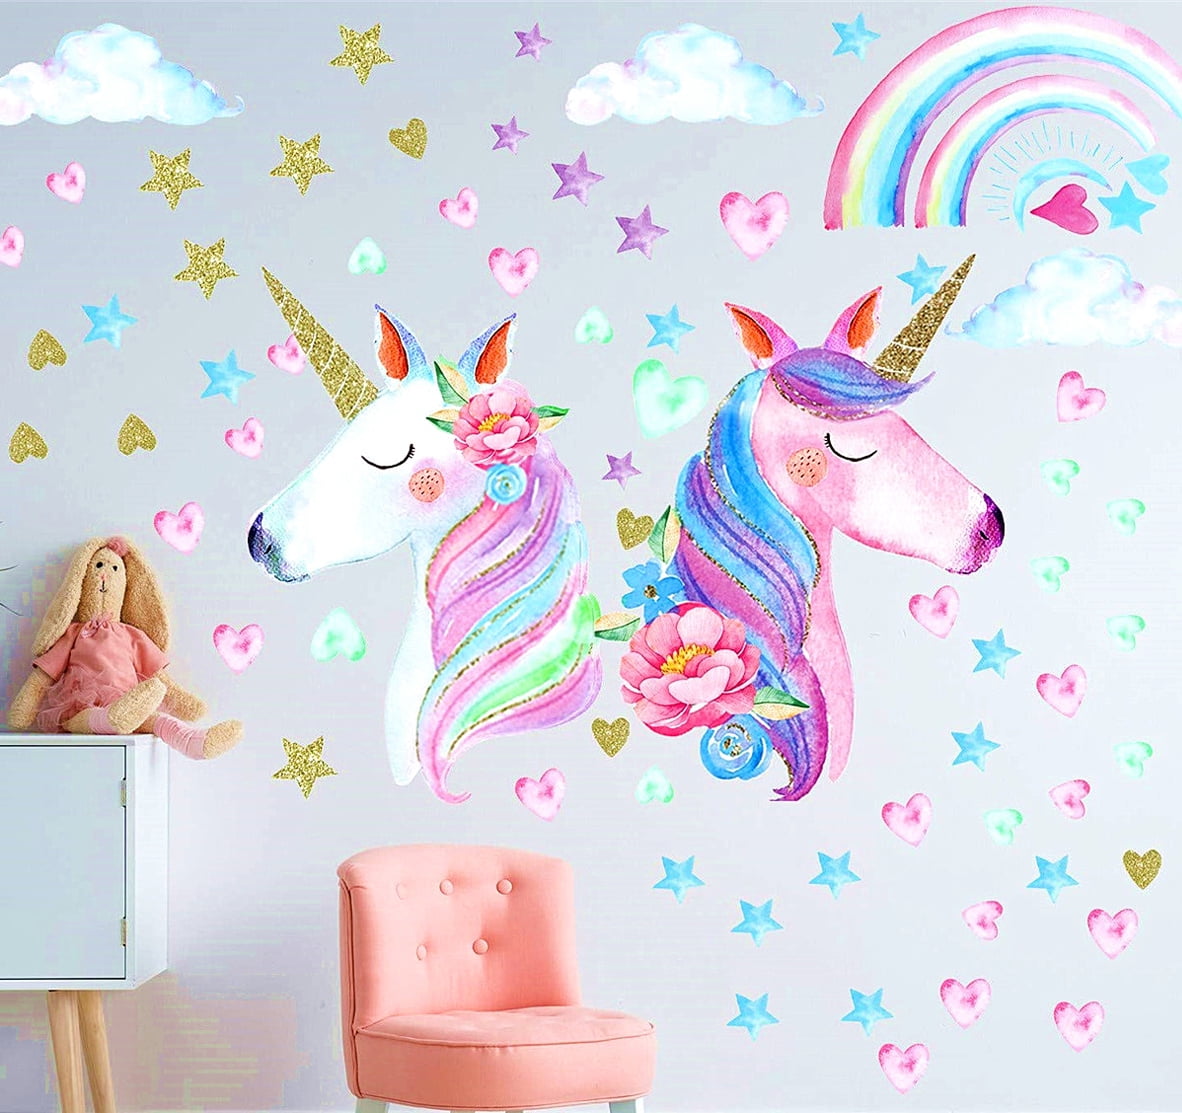 Magical Unicorn & Stars Mural Wall Stickers Children's Bedroom Nursery Decal 